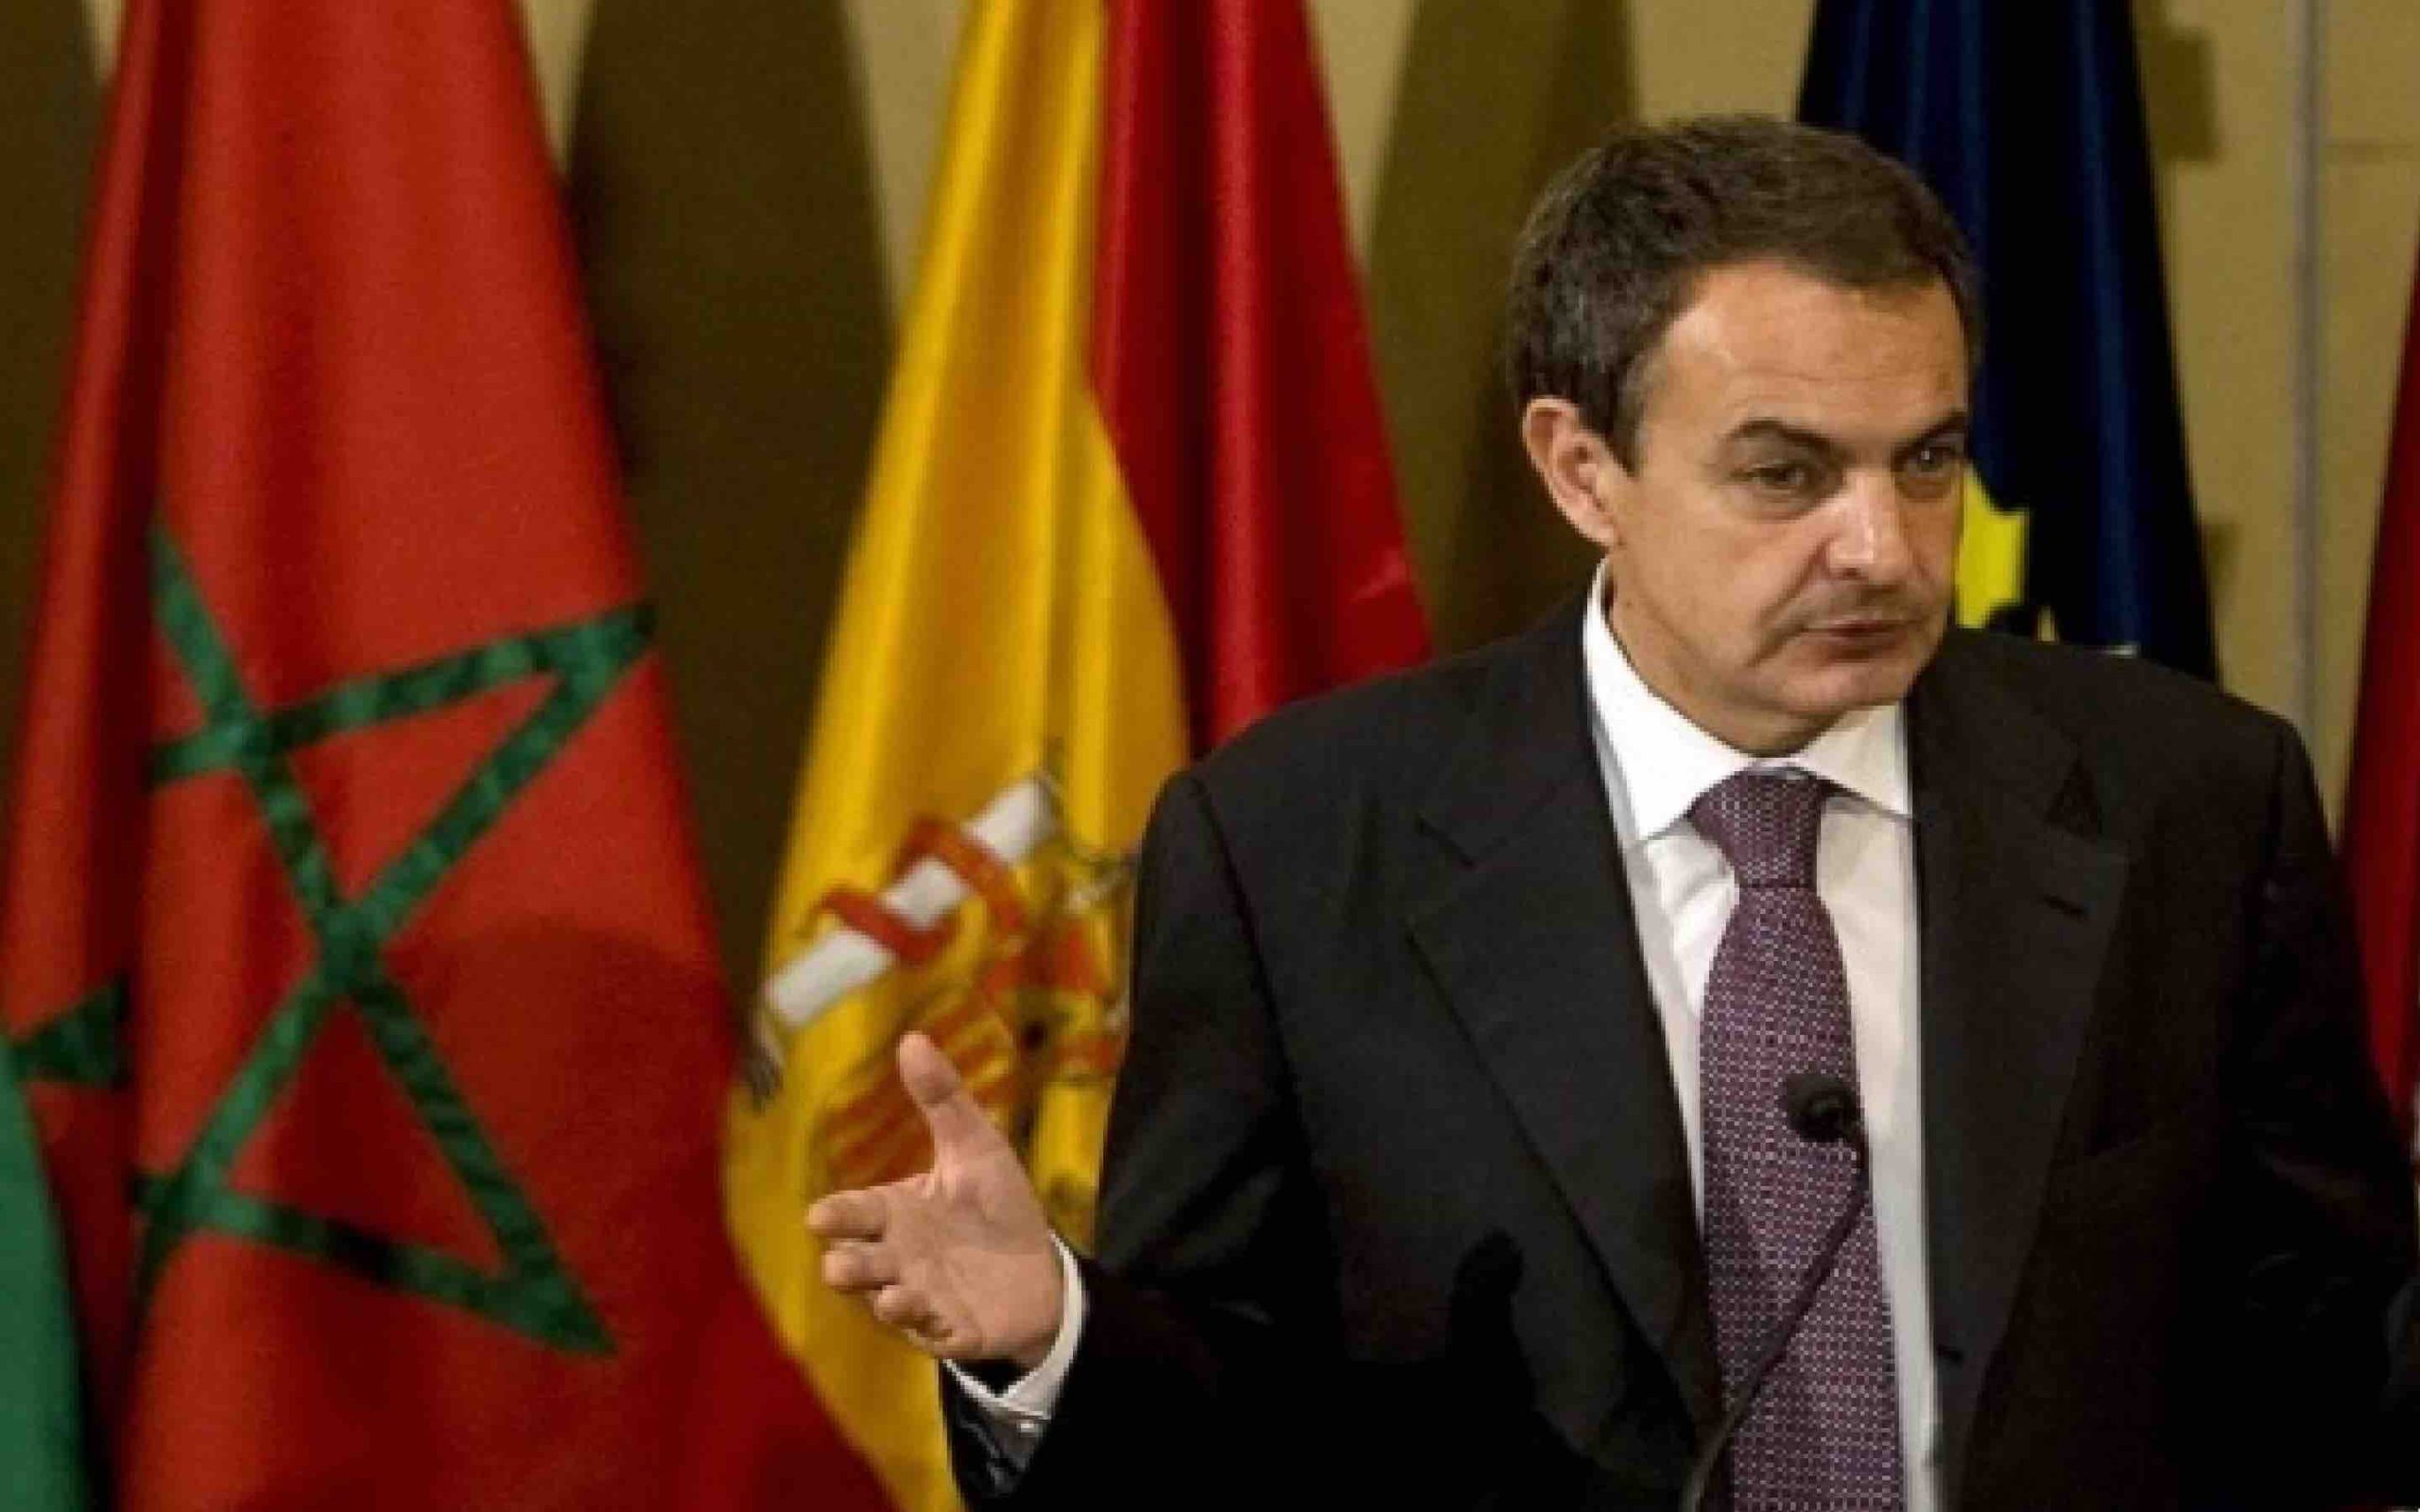 José Luis Rodriguez Zapatero Maroc Espagne Morocco Spain